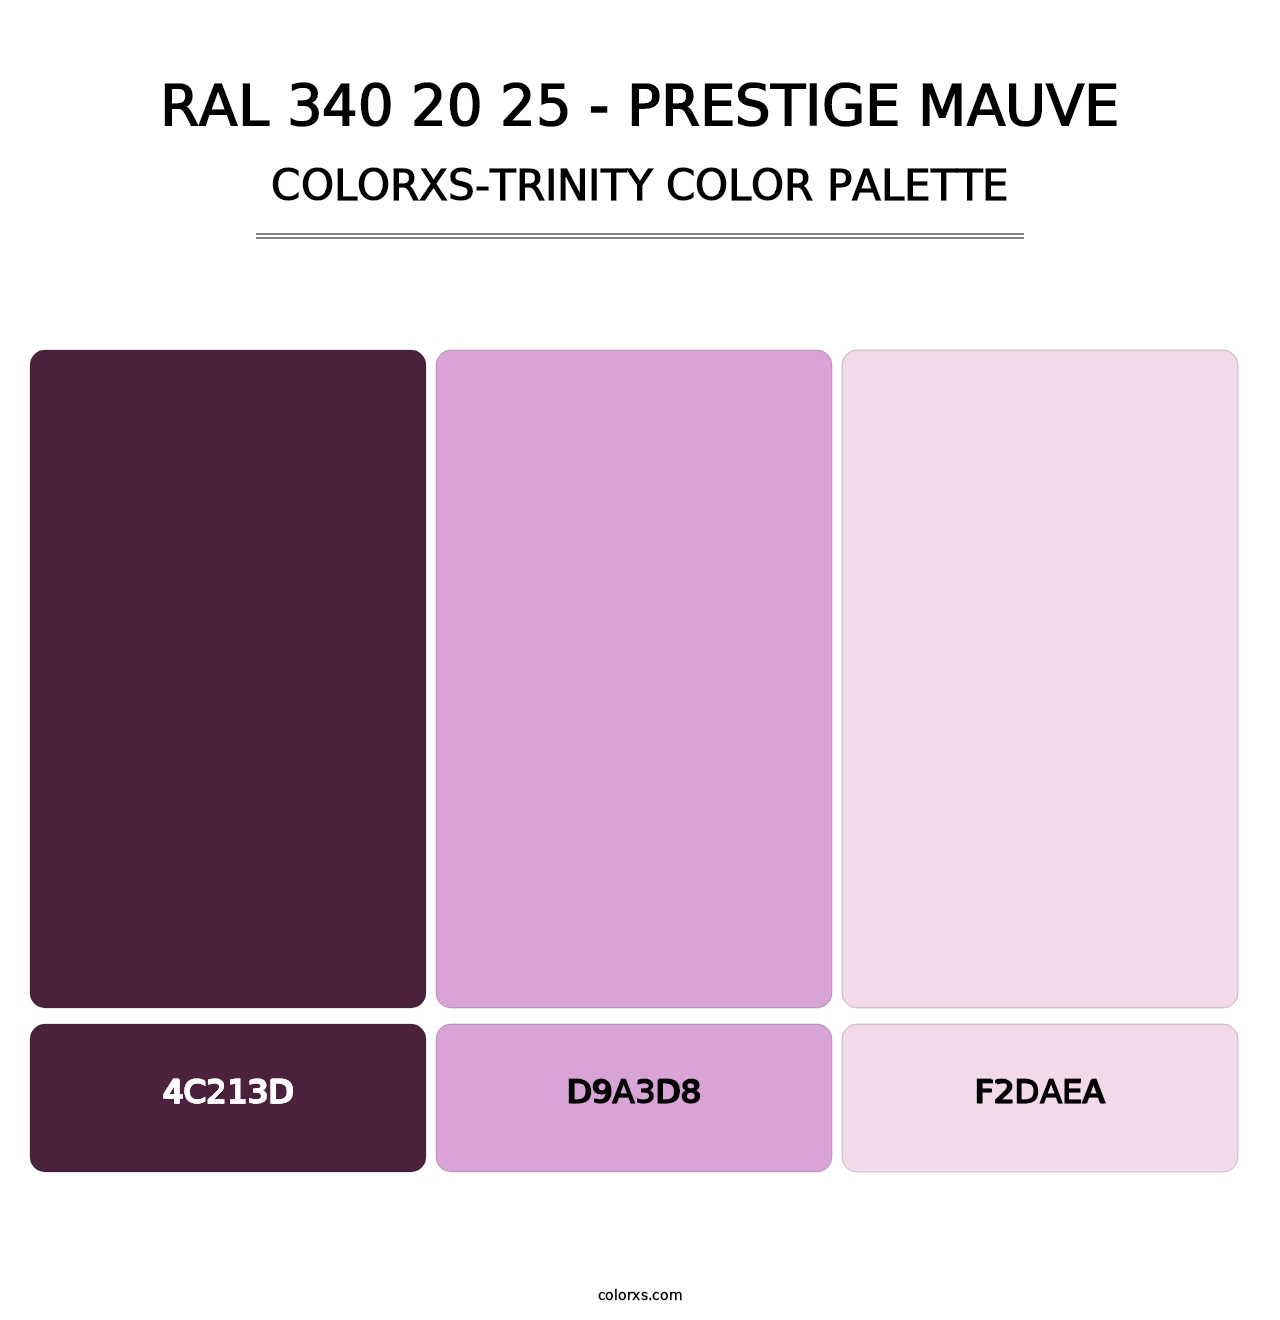 RAL 340 20 25 - Prestige Mauve - Colorxs Trinity Palette